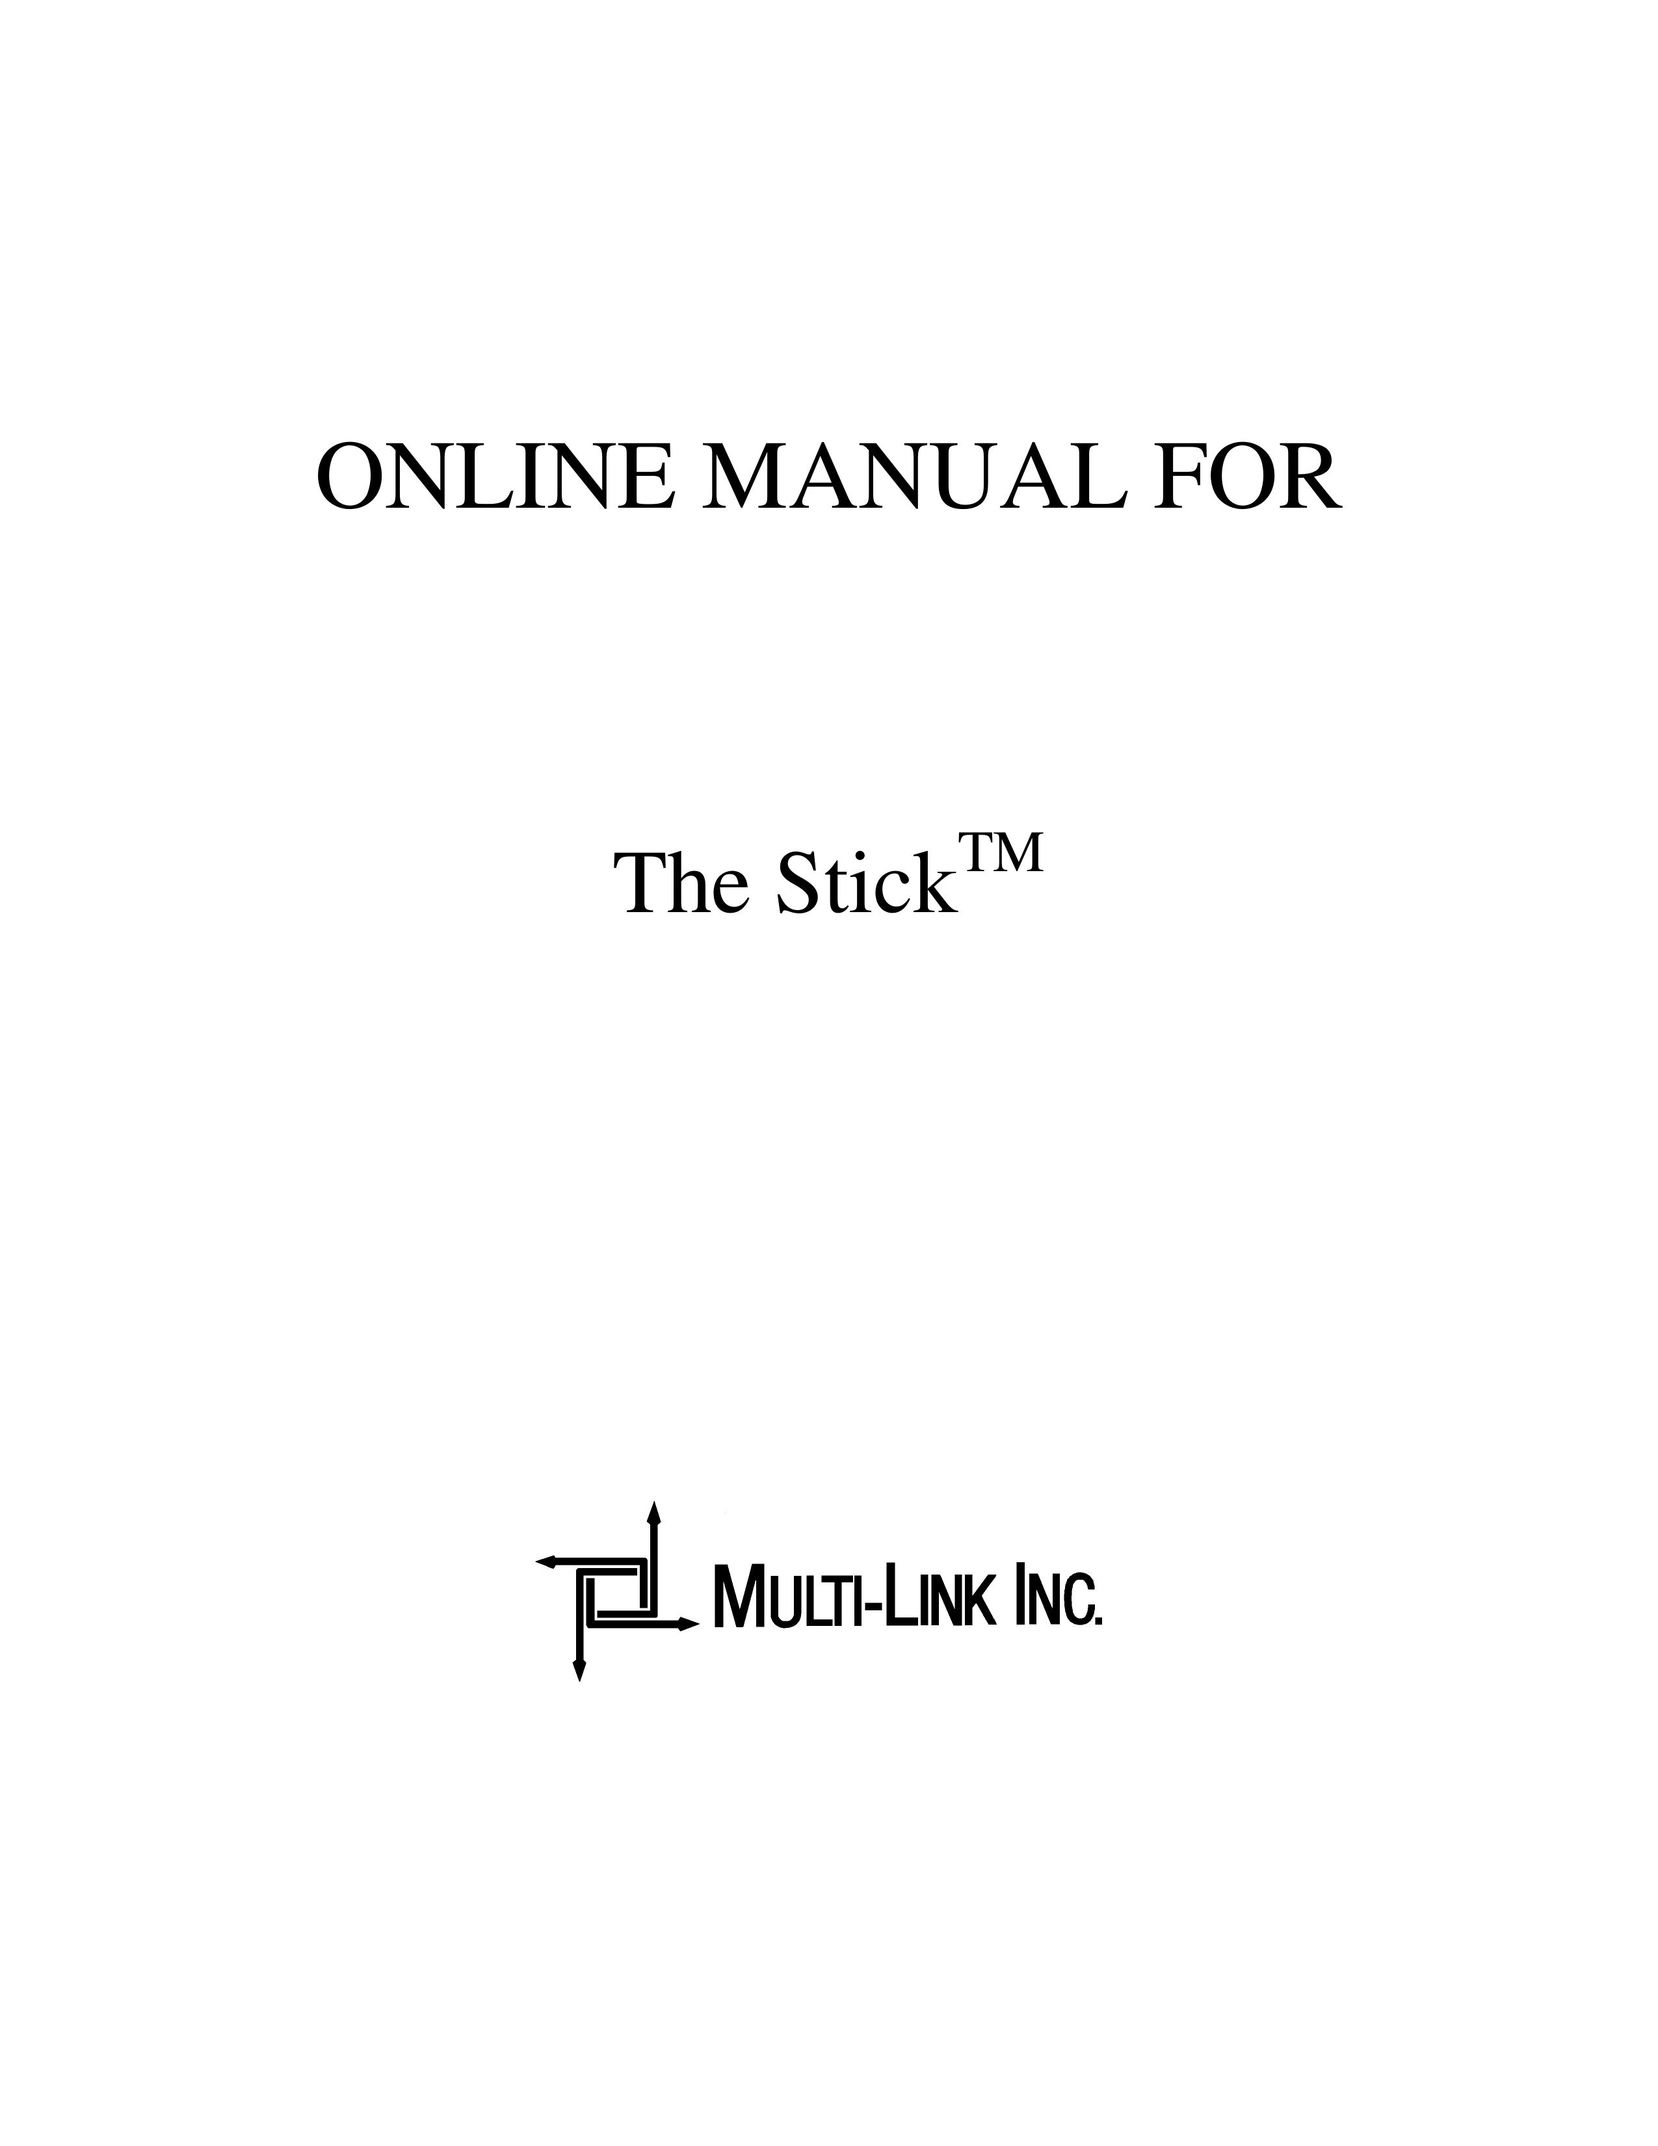 Multi-Link Voice/Fax/Modem Call Processor Modem User Manual